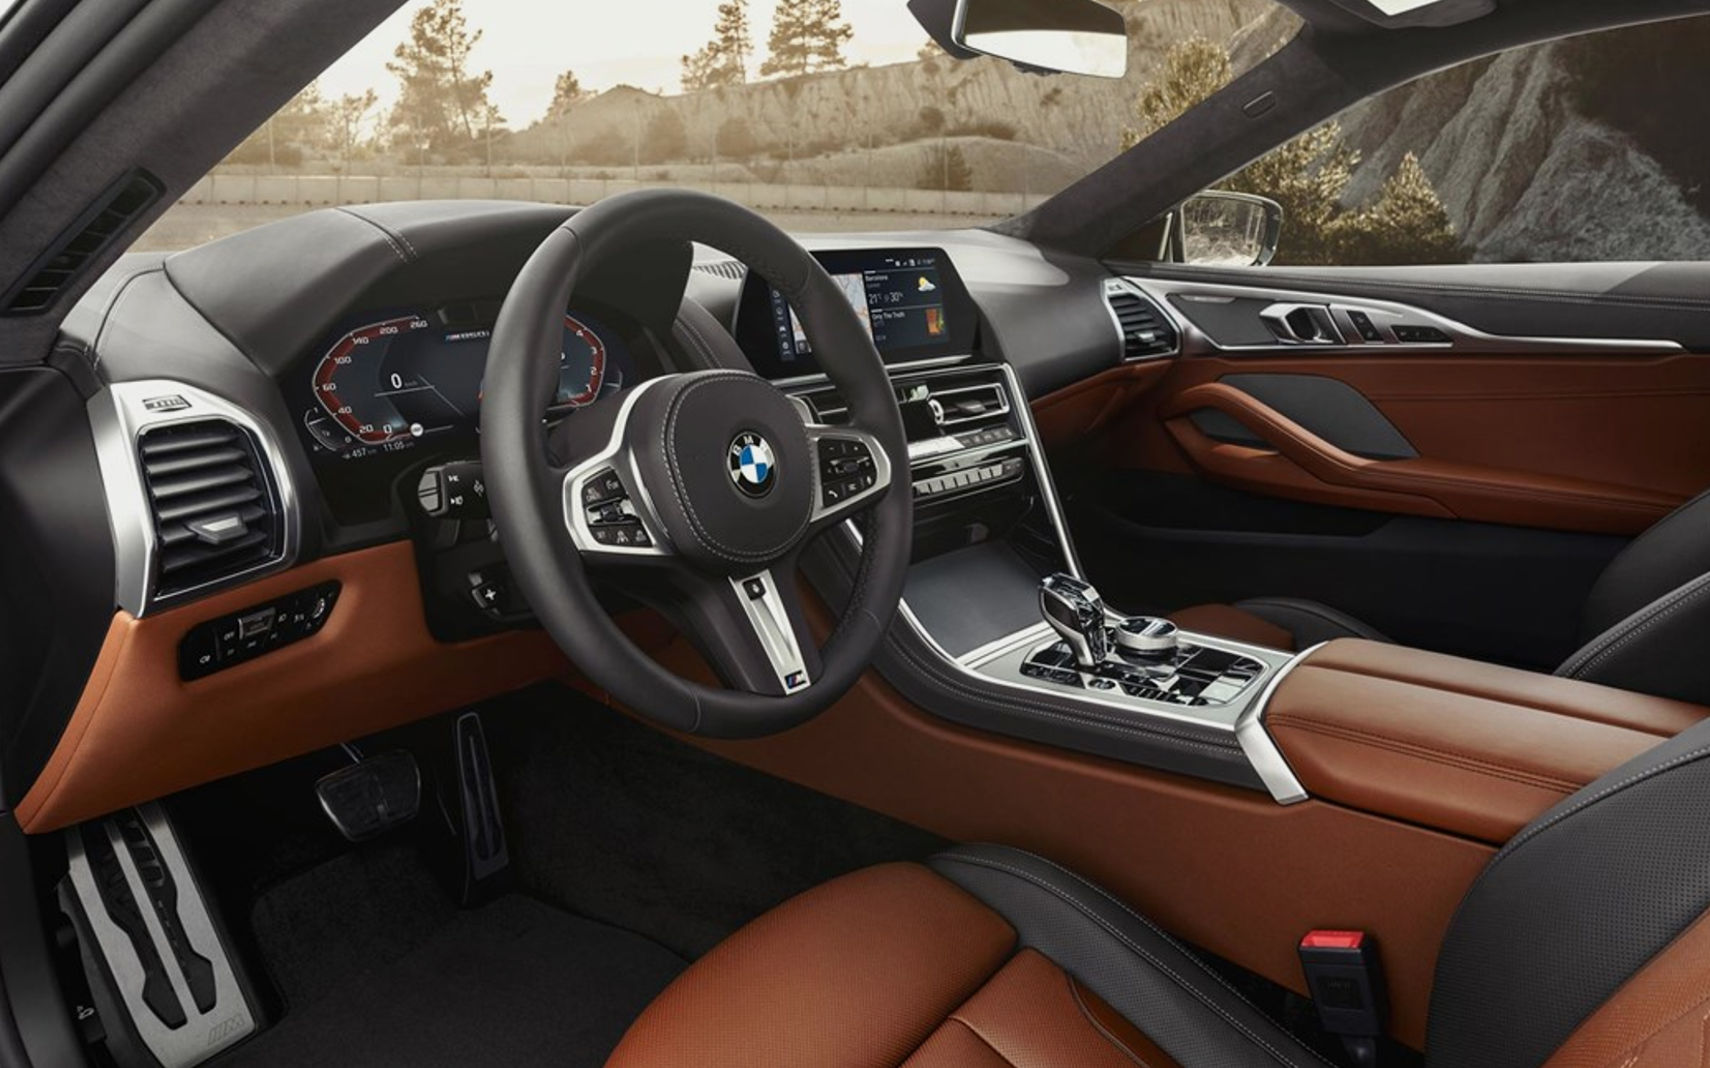 BMW 8 Series Hits Showrooms in November 2018